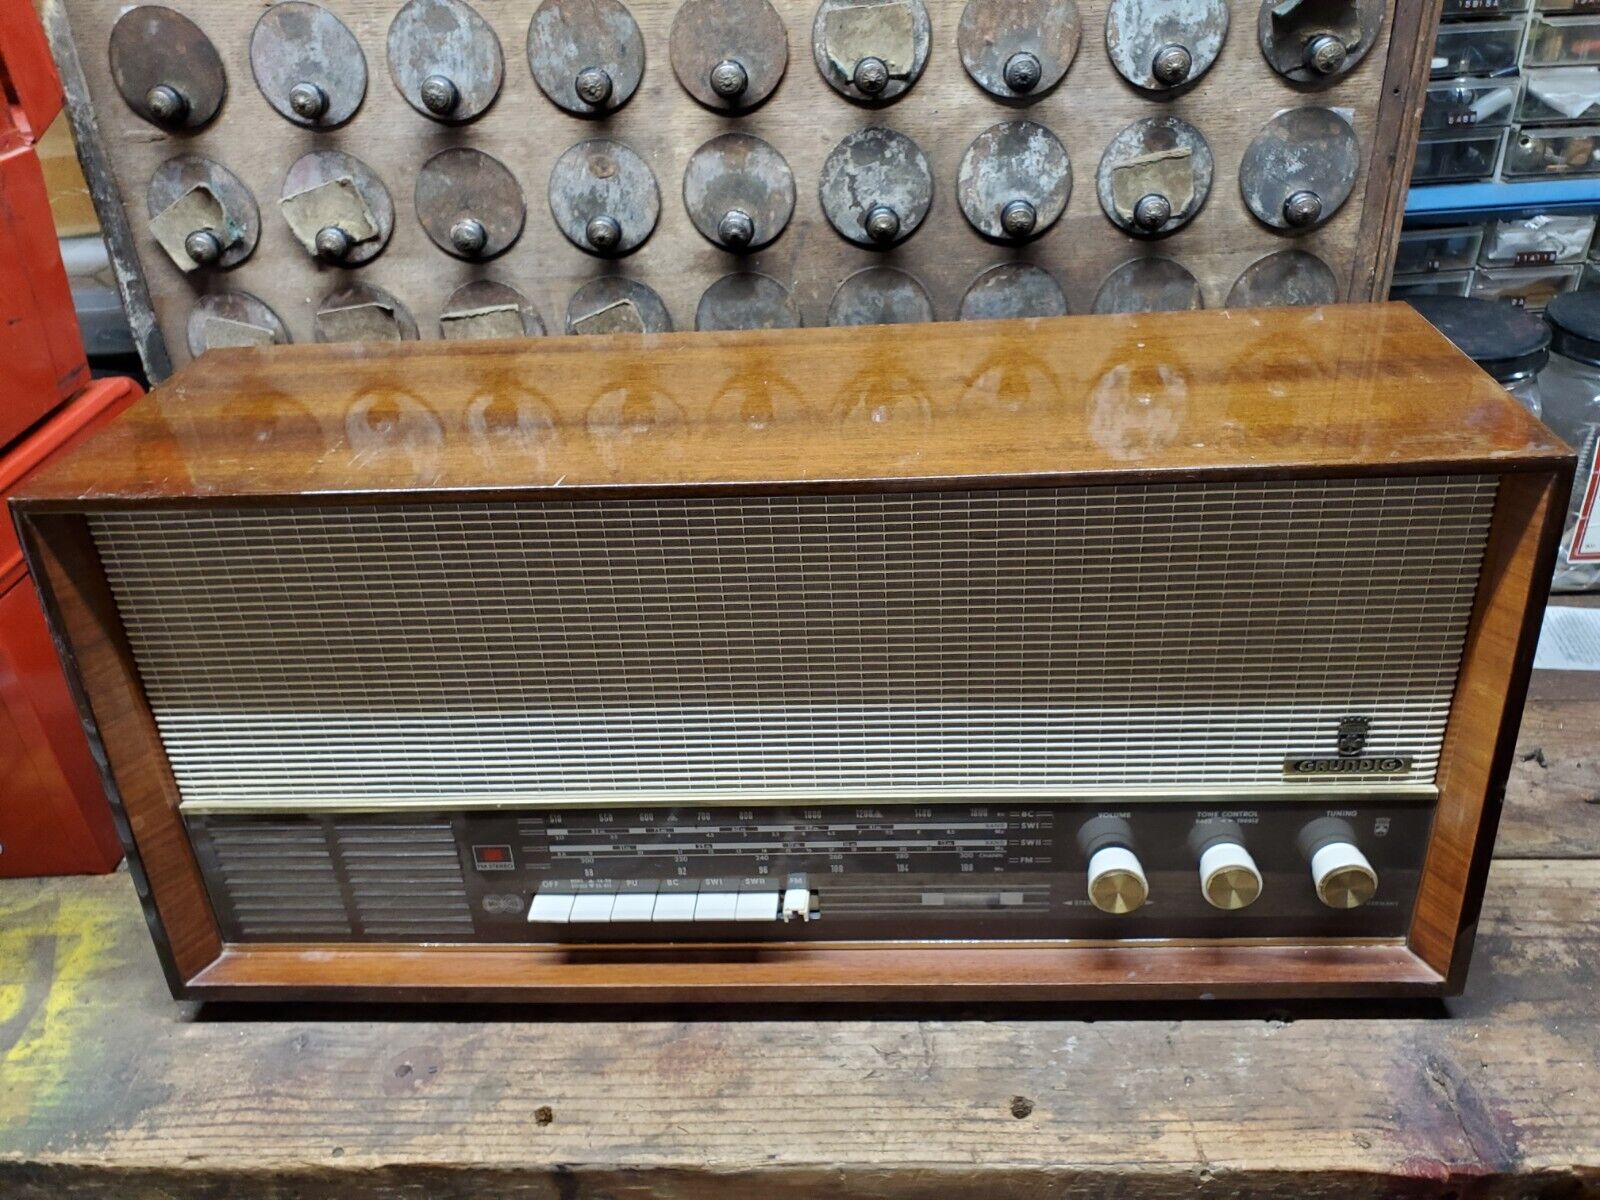 1965 Rare GRUNDIG MIDCENTURY TYPE 4570U VACUUM TUBE AM/FM/SW RADIO - German Made